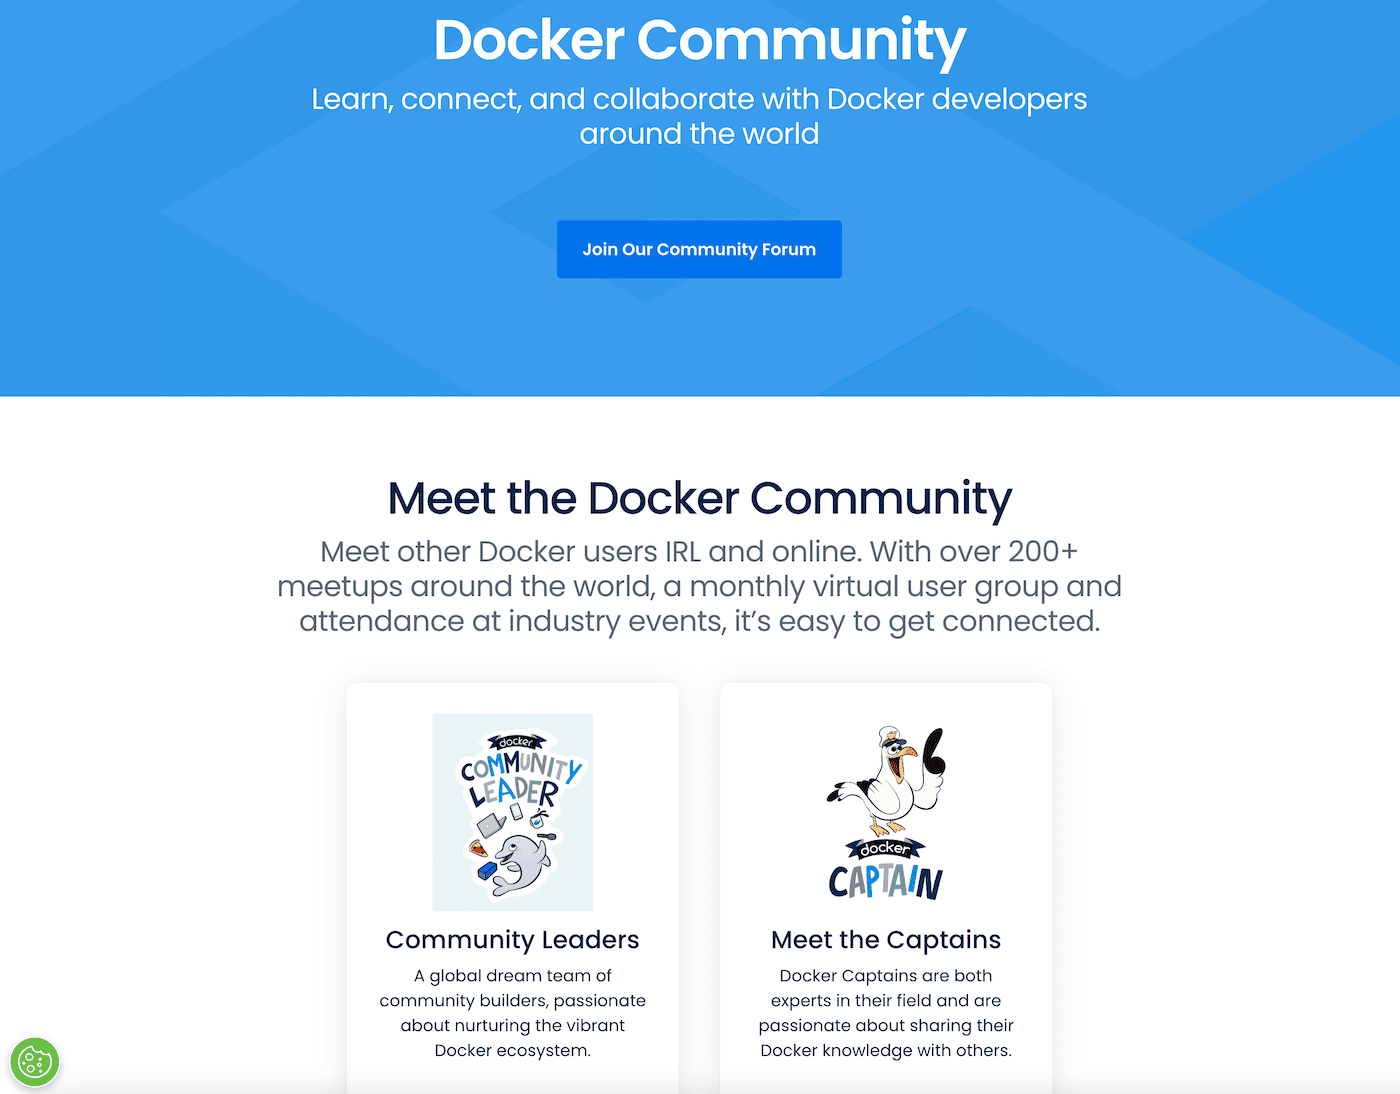 The Docker community homepage